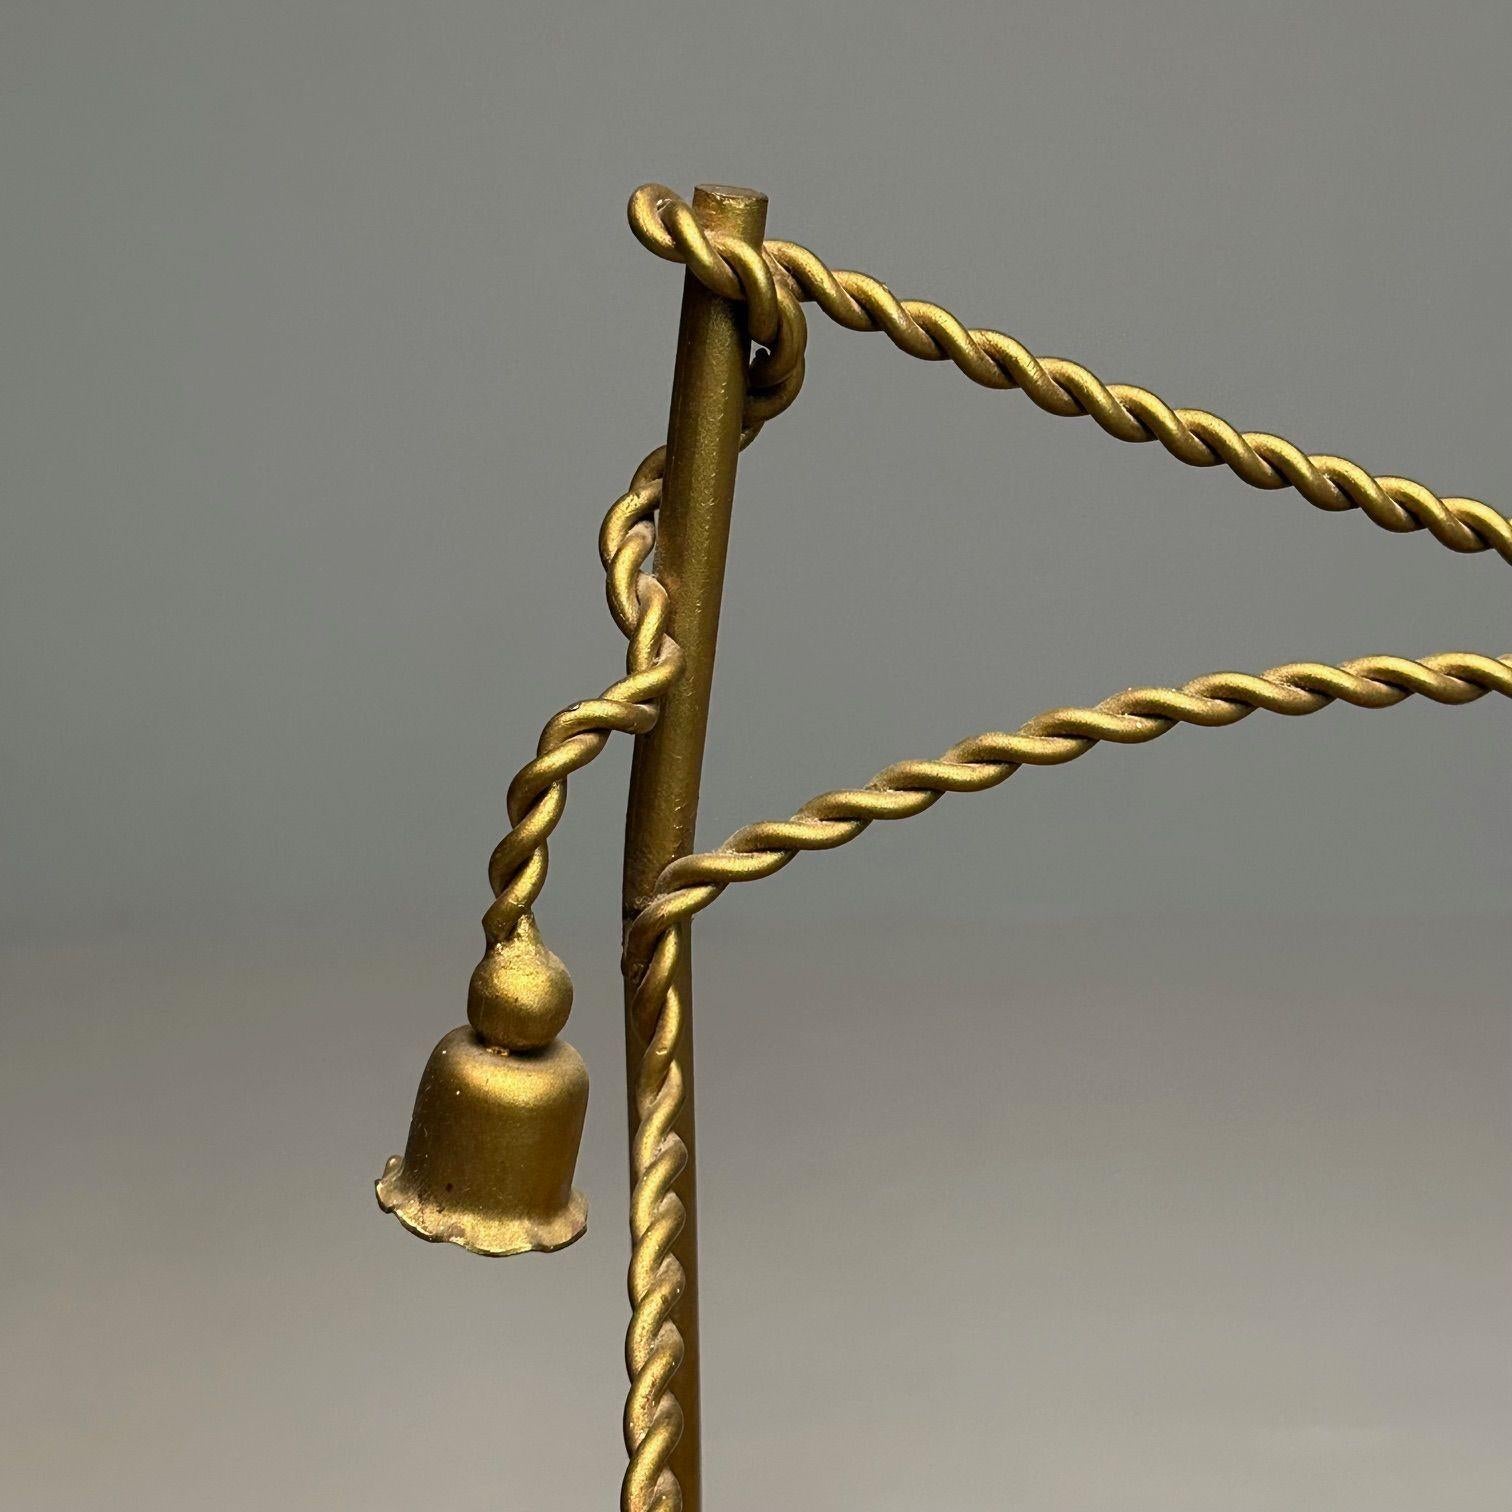 Hollywood Regency Gilt Bronze Magazine Rack, Rope an Tassel Form For Sale 5